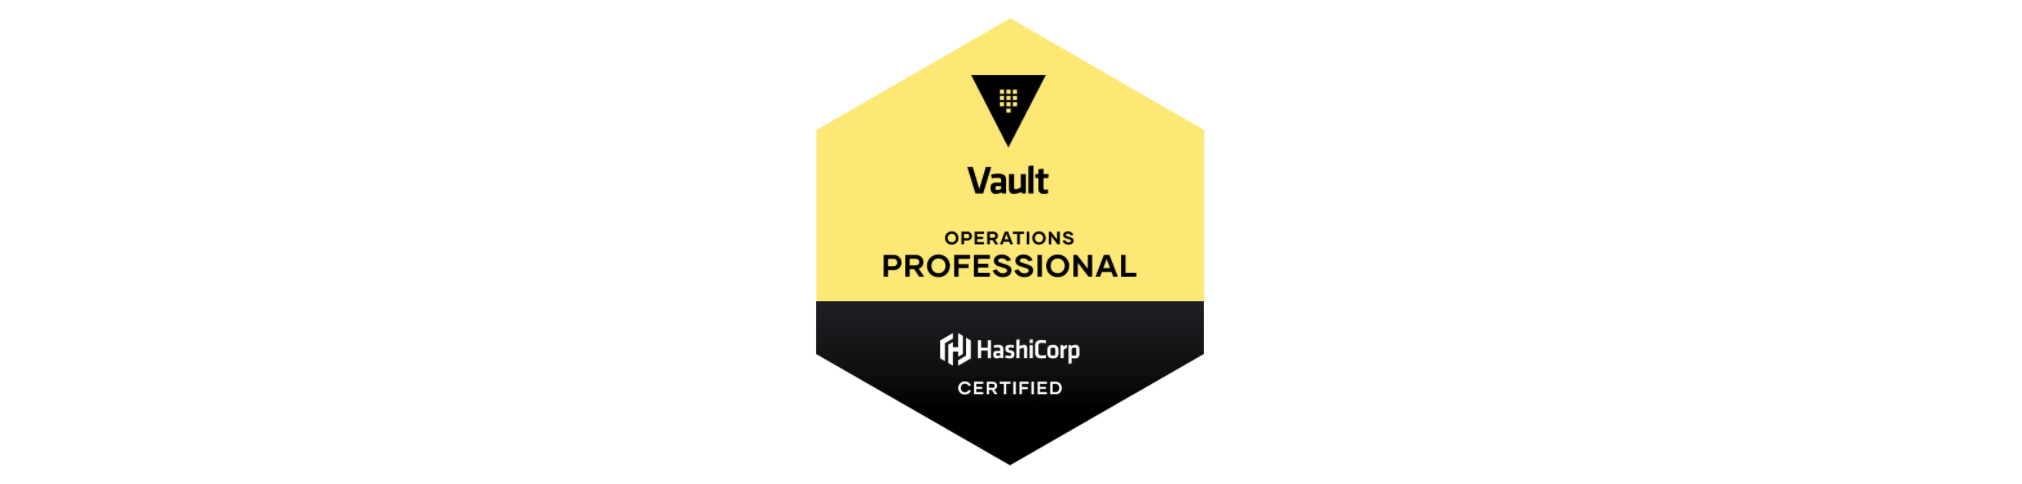 Vault Professional Certification badge